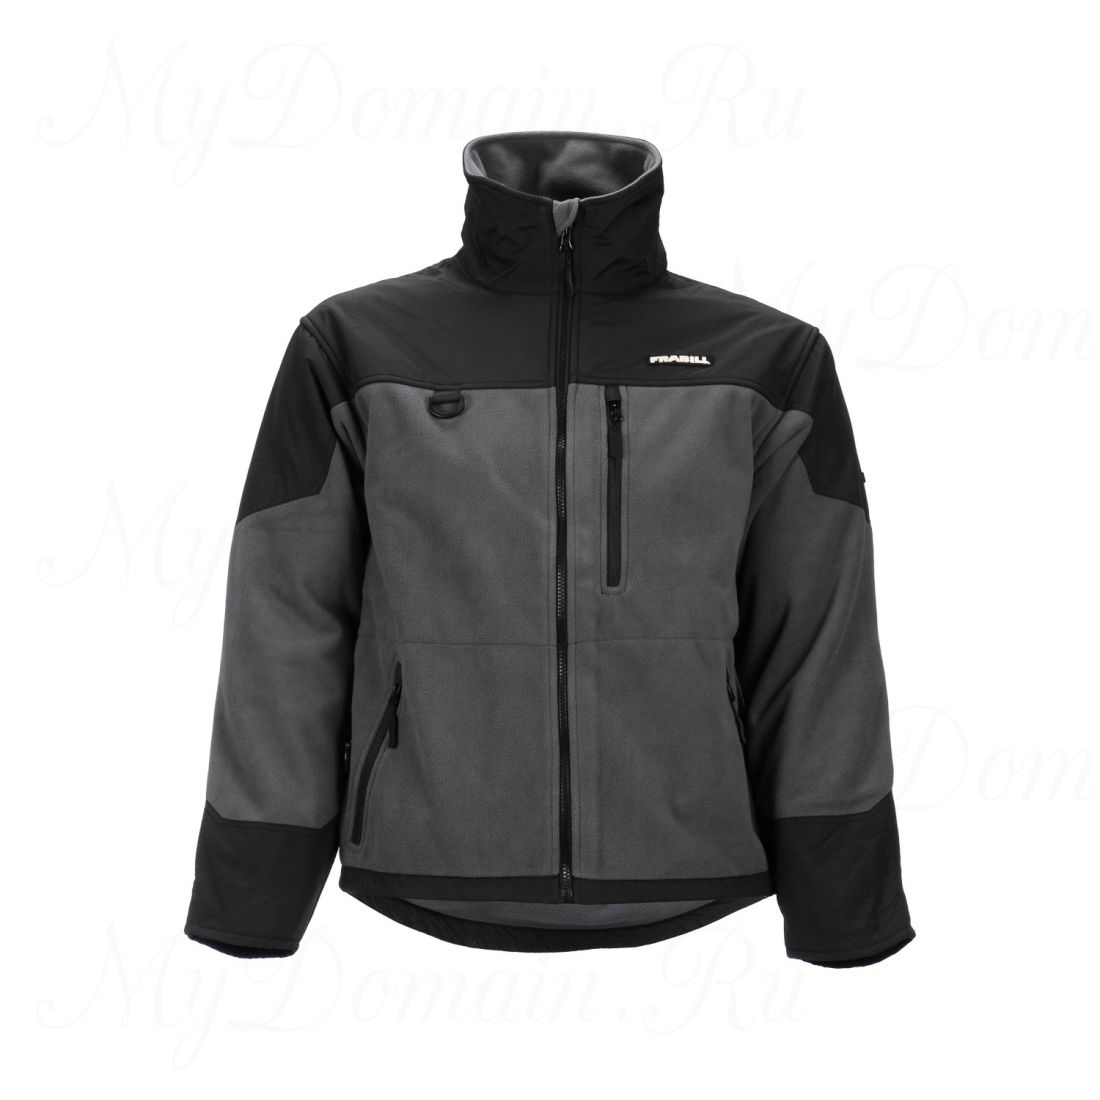 Куртка флисовая Frabill FXE WINDPROOF FLEECE Jacket размер S